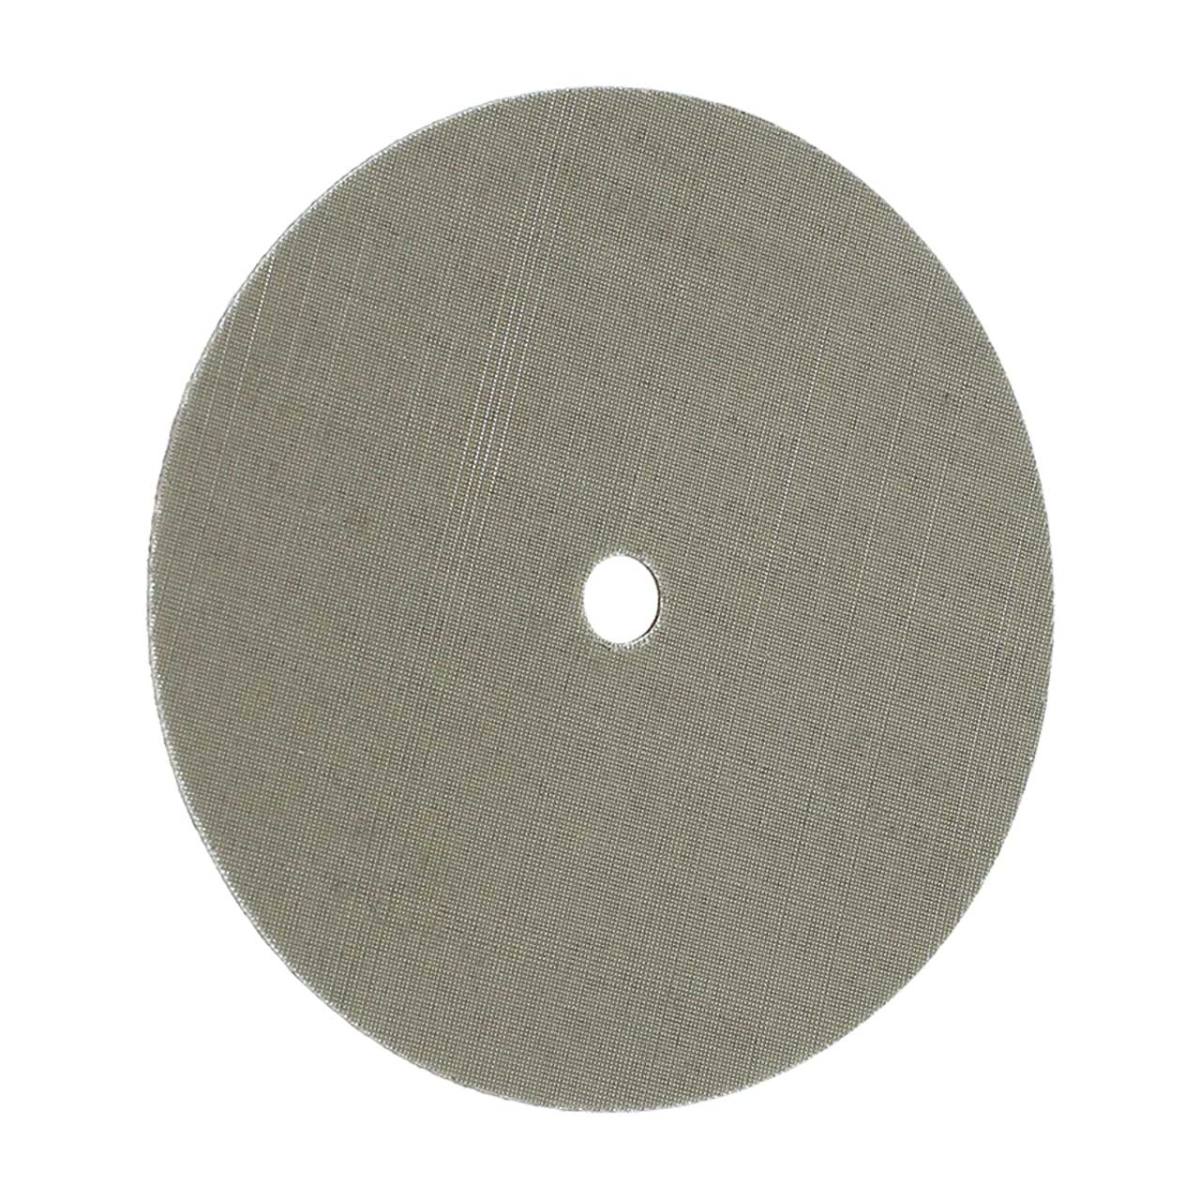 FIX KLETT Trizact disc, 115 mm x 10 mm, grain 120 / A 160, hook and loop